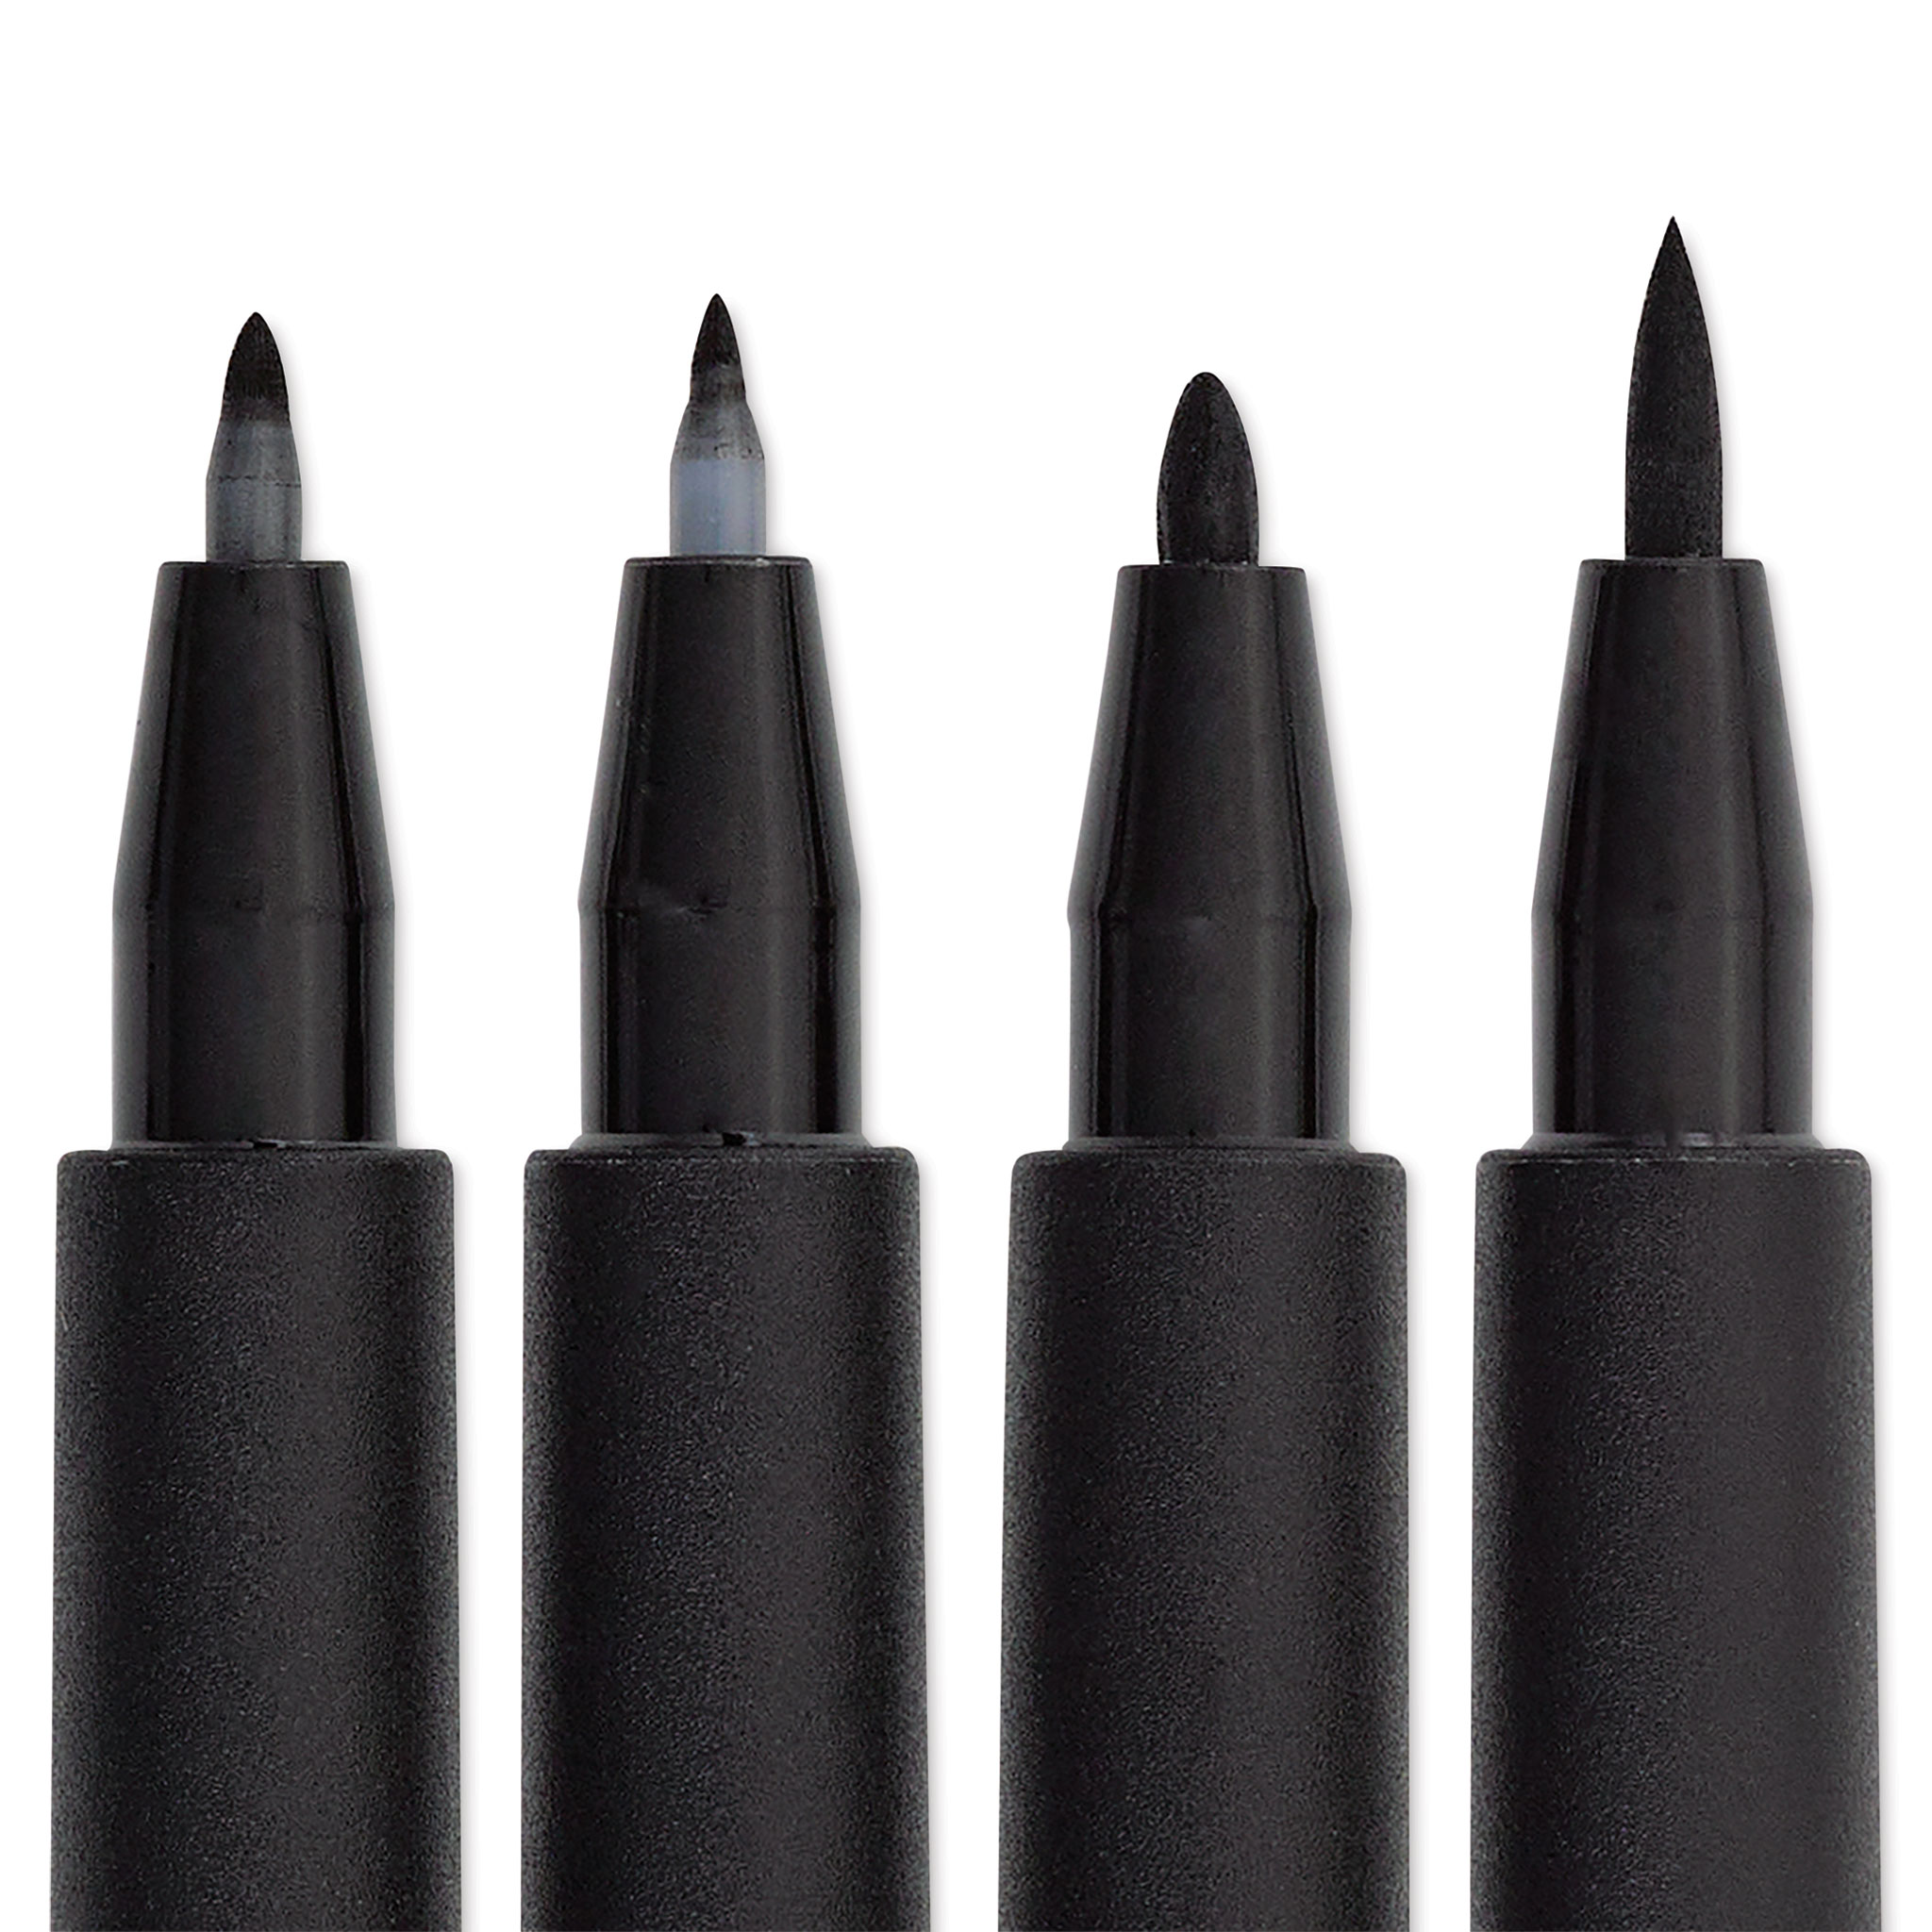 Faber-Castell Pitt Artist Pens - Modern Lettering Set, Black, Set of 4,  Assorted Nibs